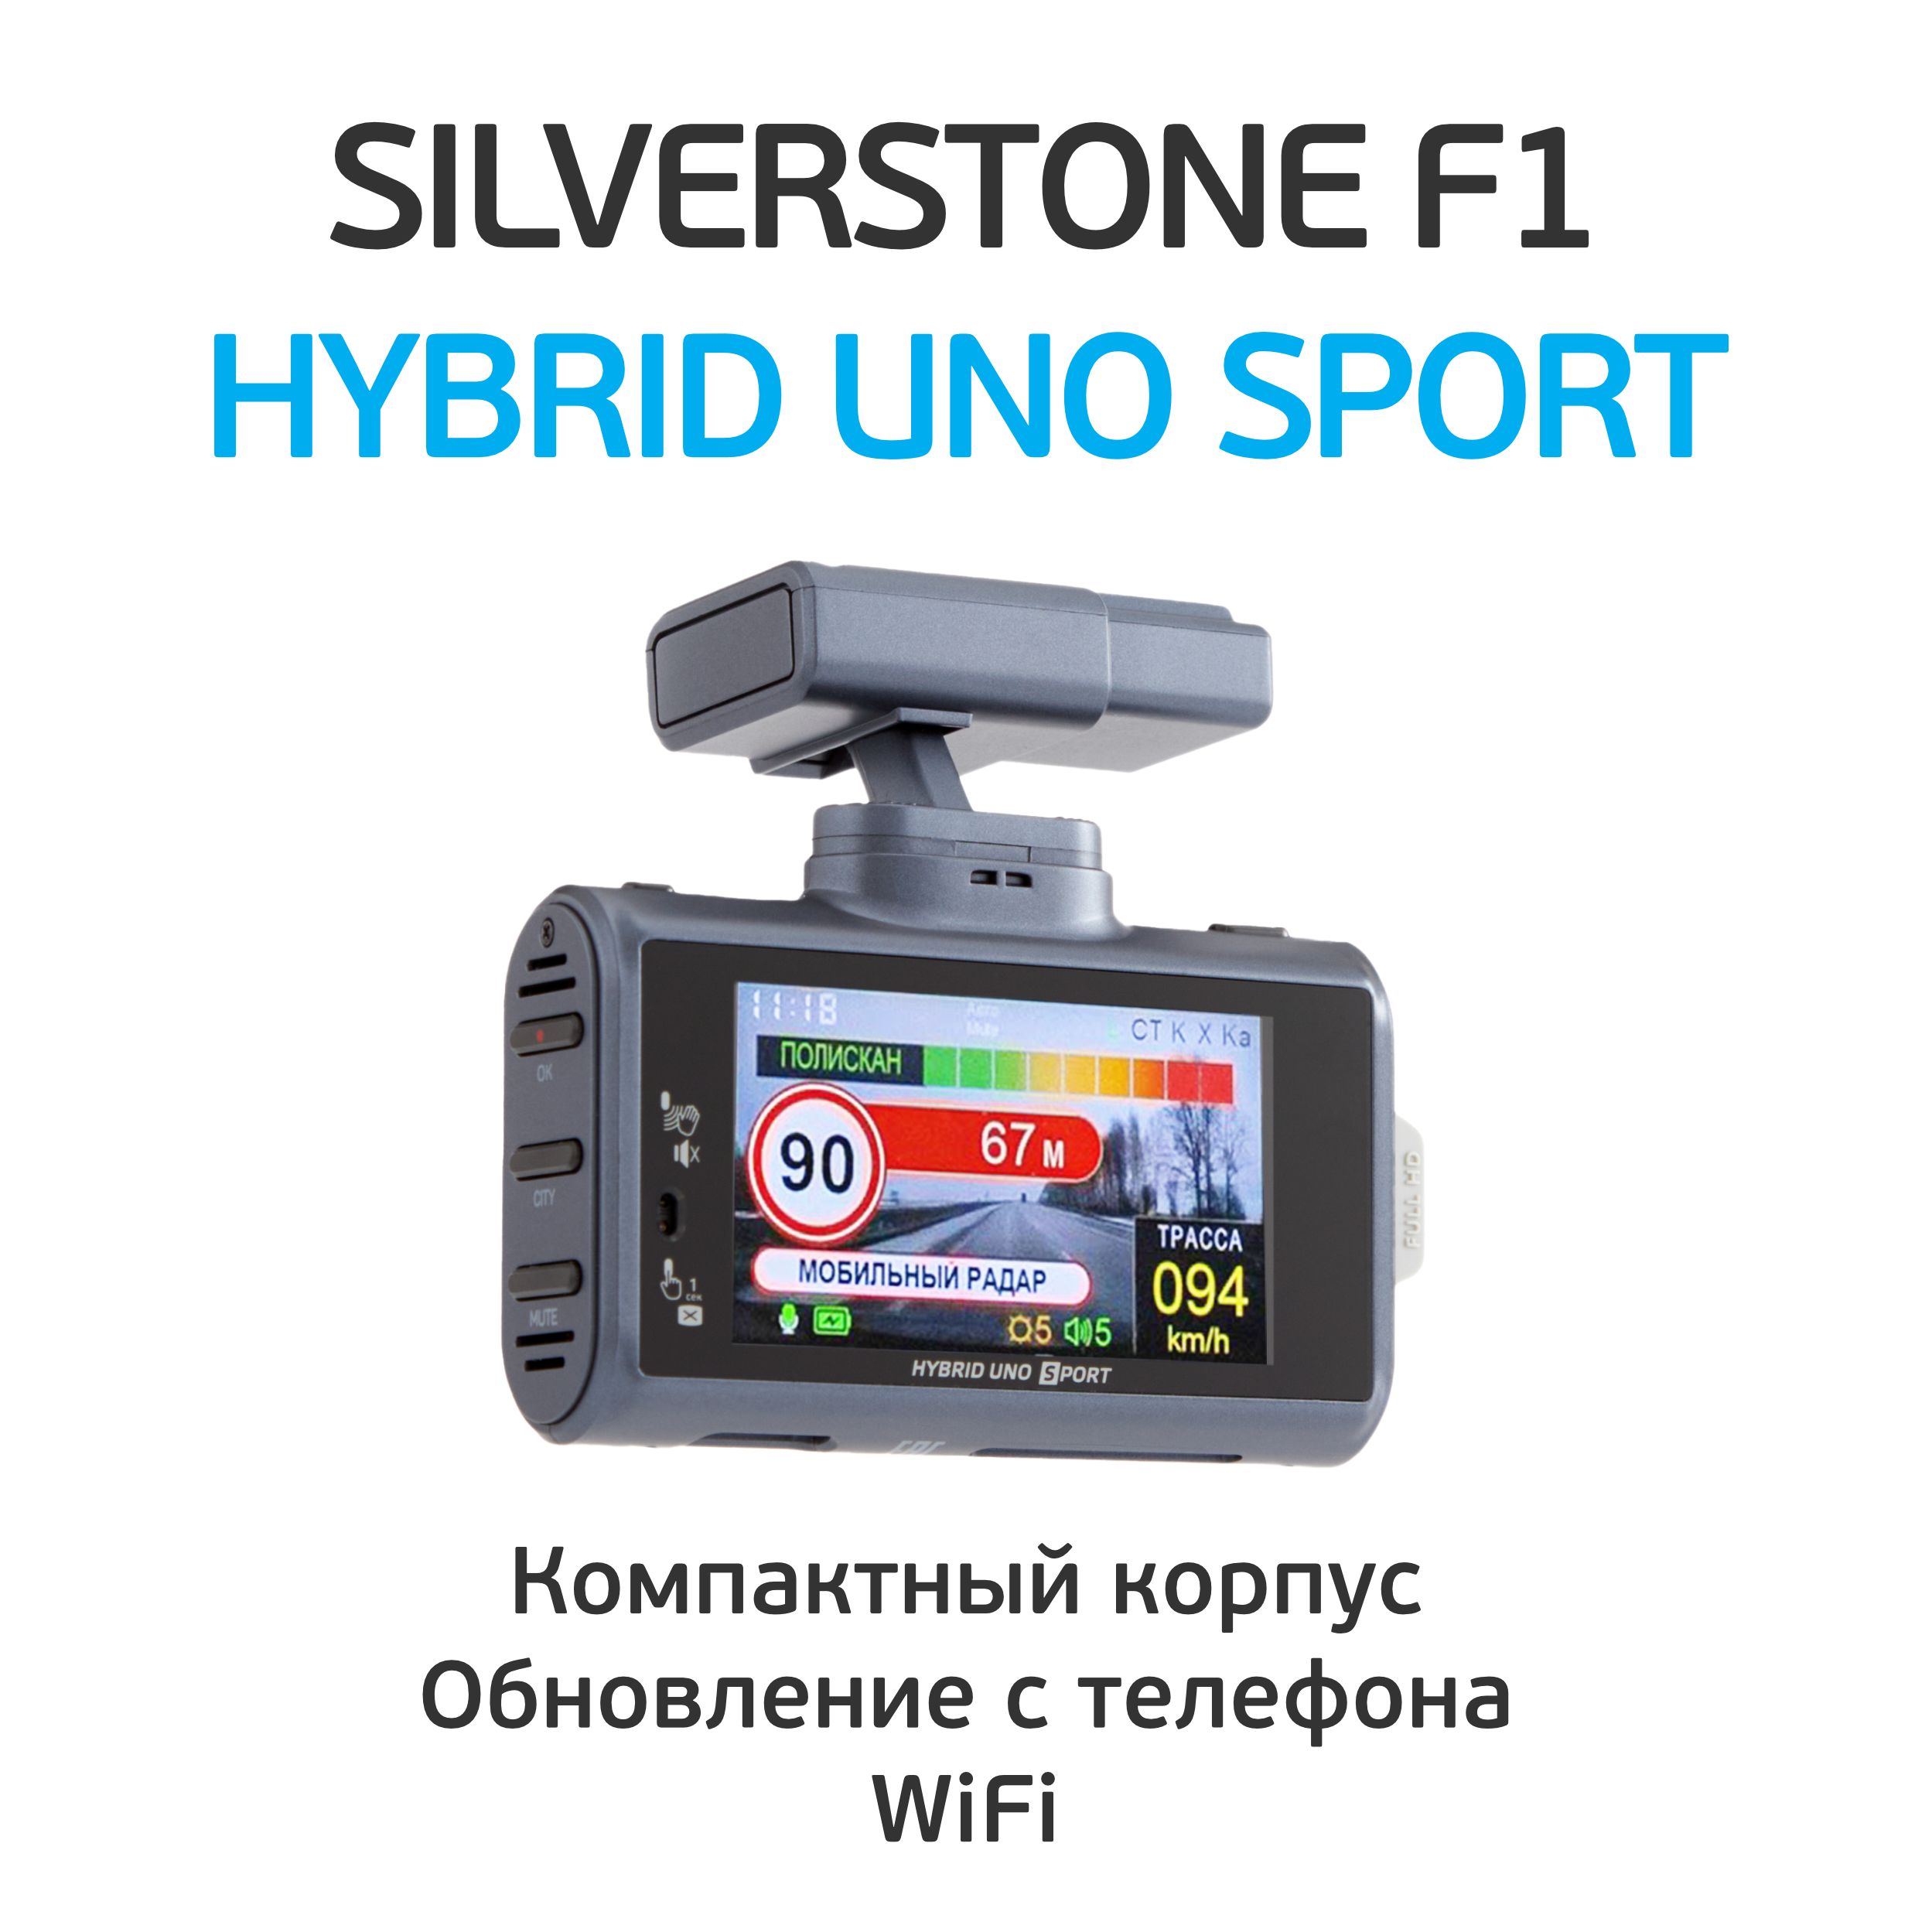 Silverstone f1 Hybrid uno Sport обновление прошивки. Silverstone f1 Hybrid uno Sport Wi-Fi отзывы. Uno sport wifi